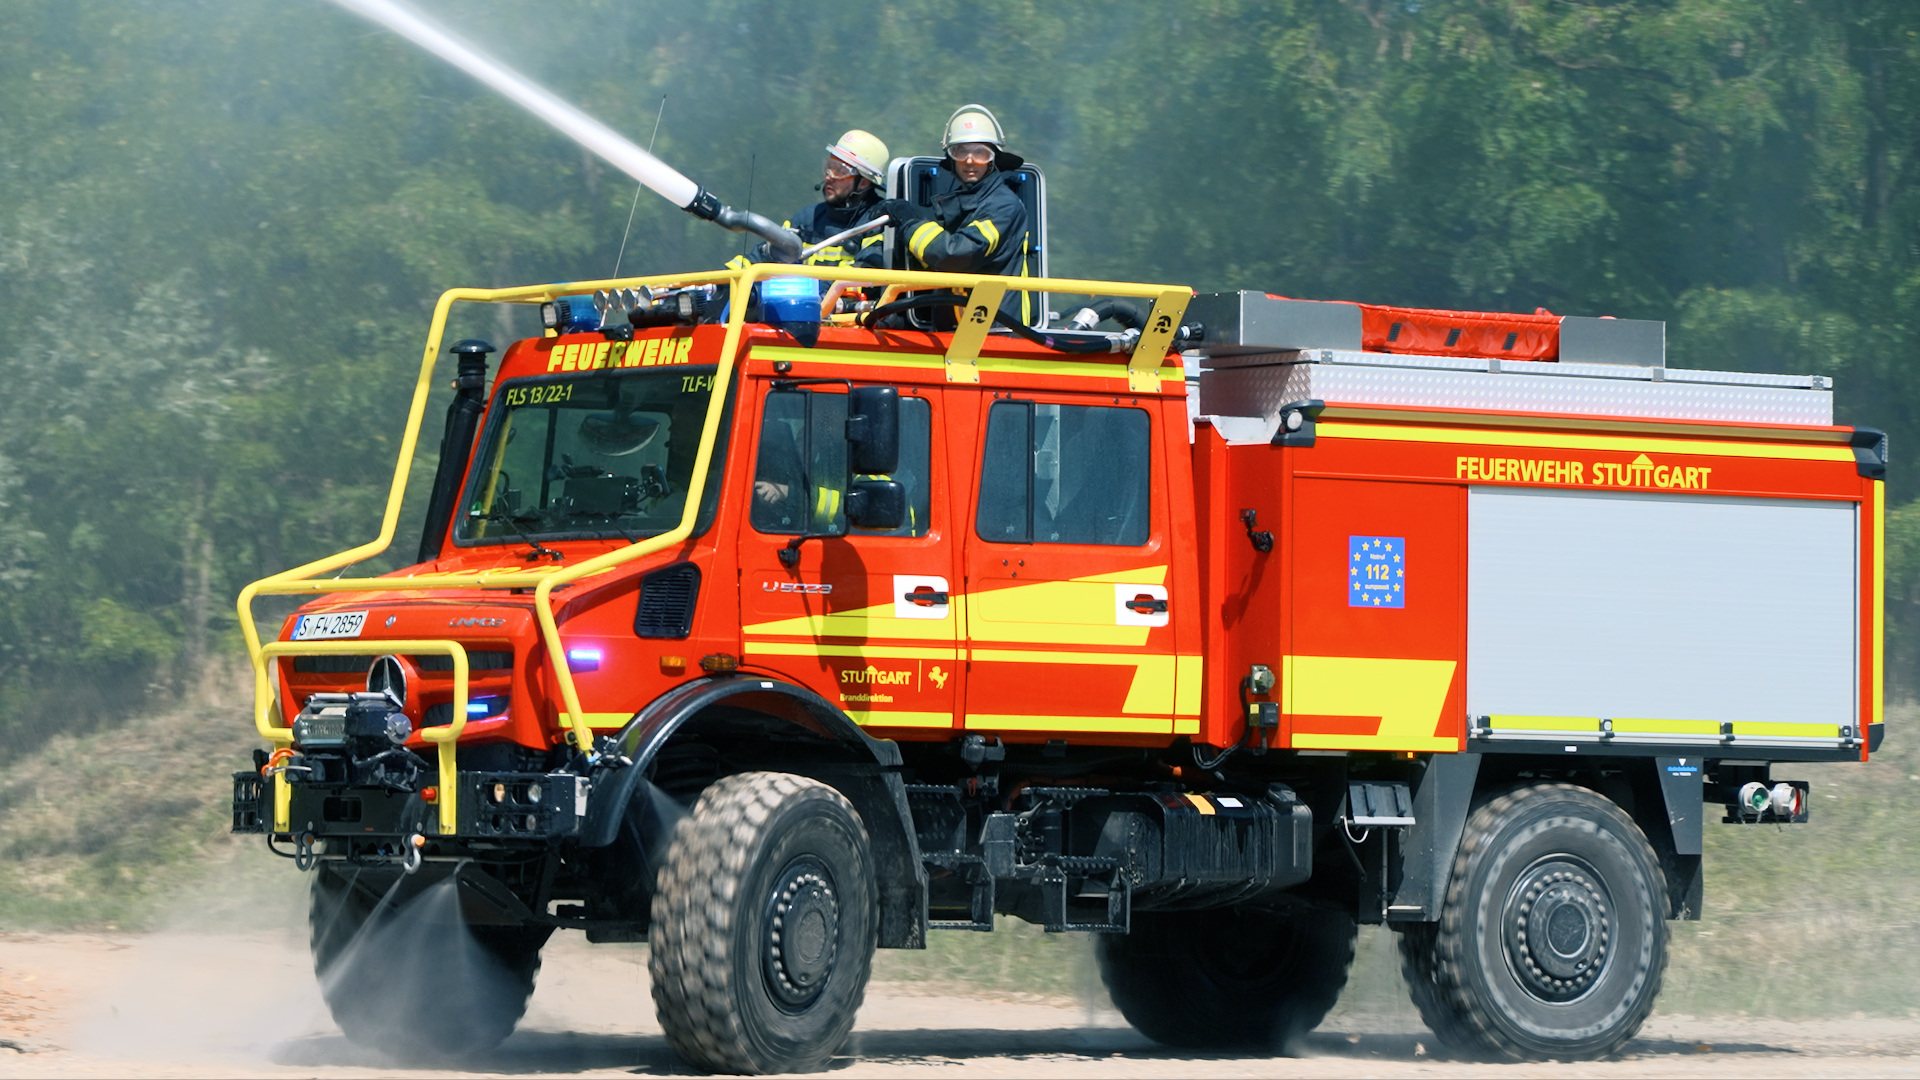 Firefighting extreme